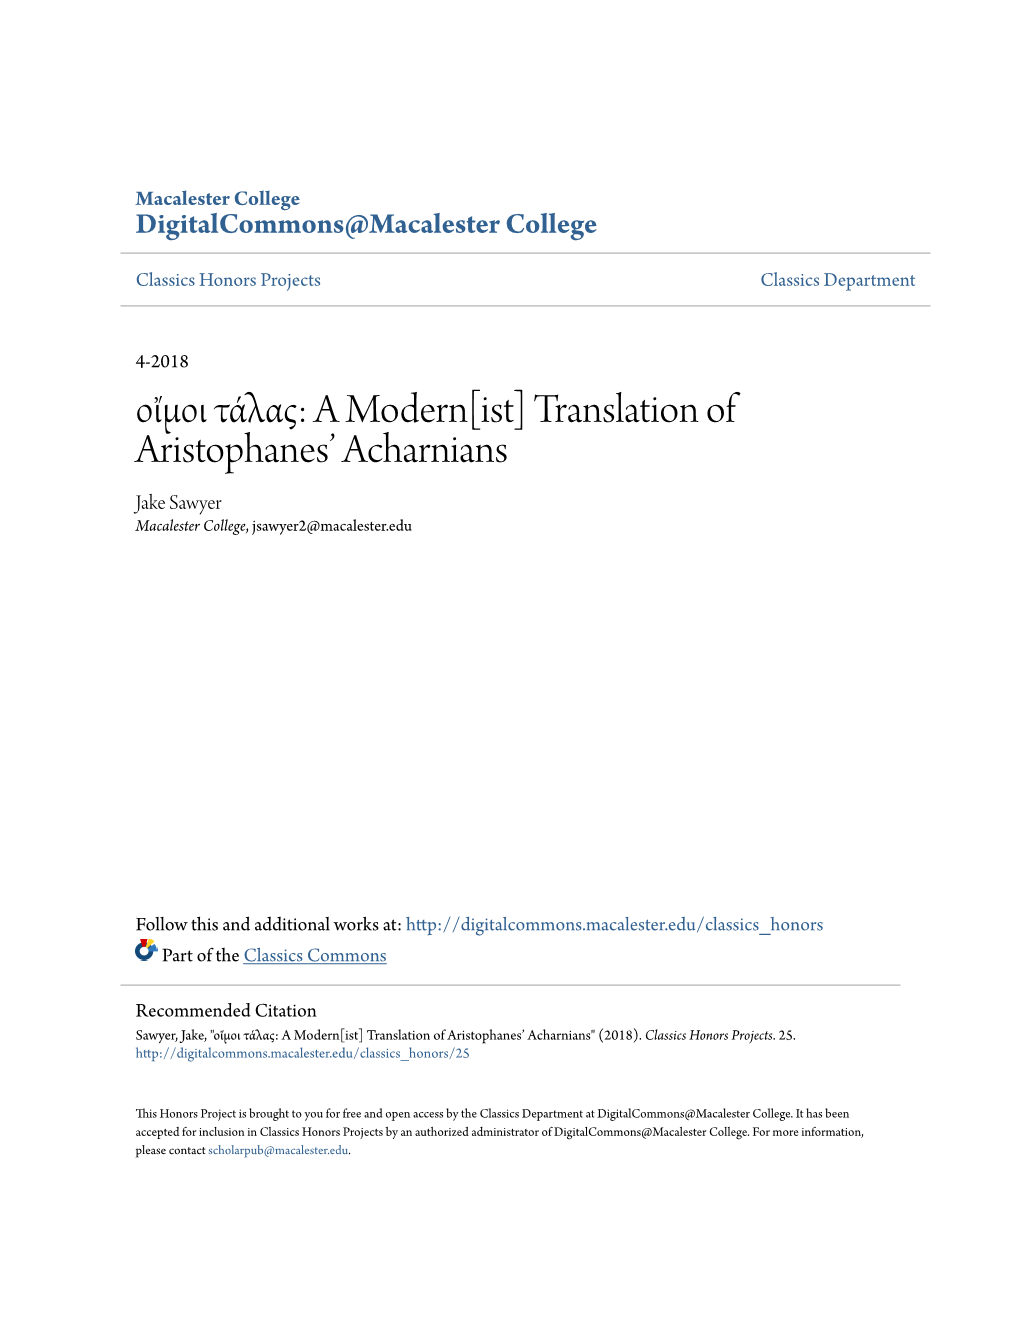 Translation of Aristophanes' Acharnians